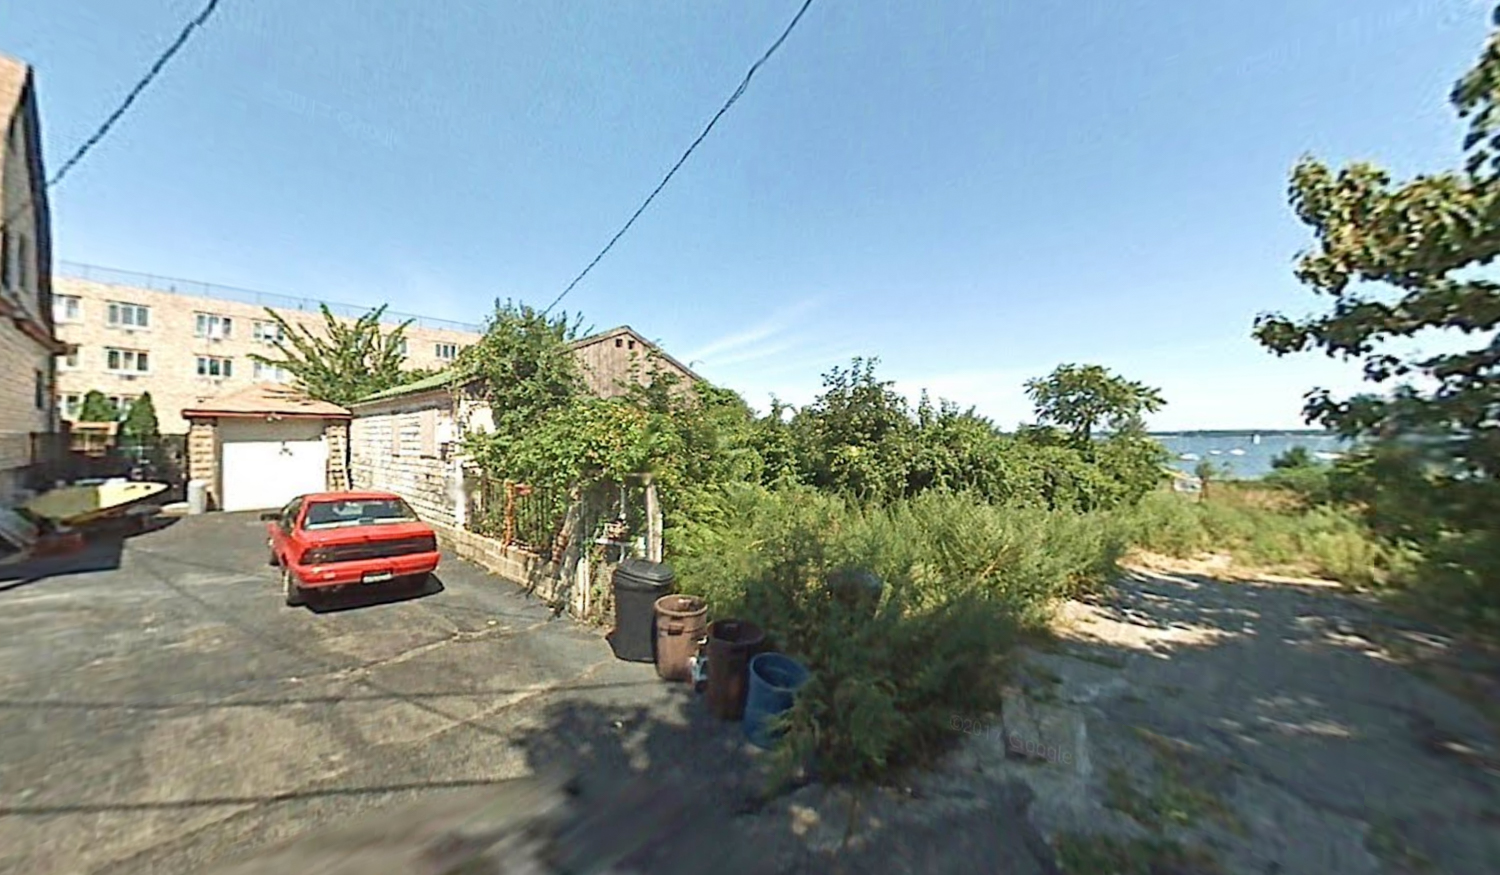 173, 174 Marine Street, via Google Maps